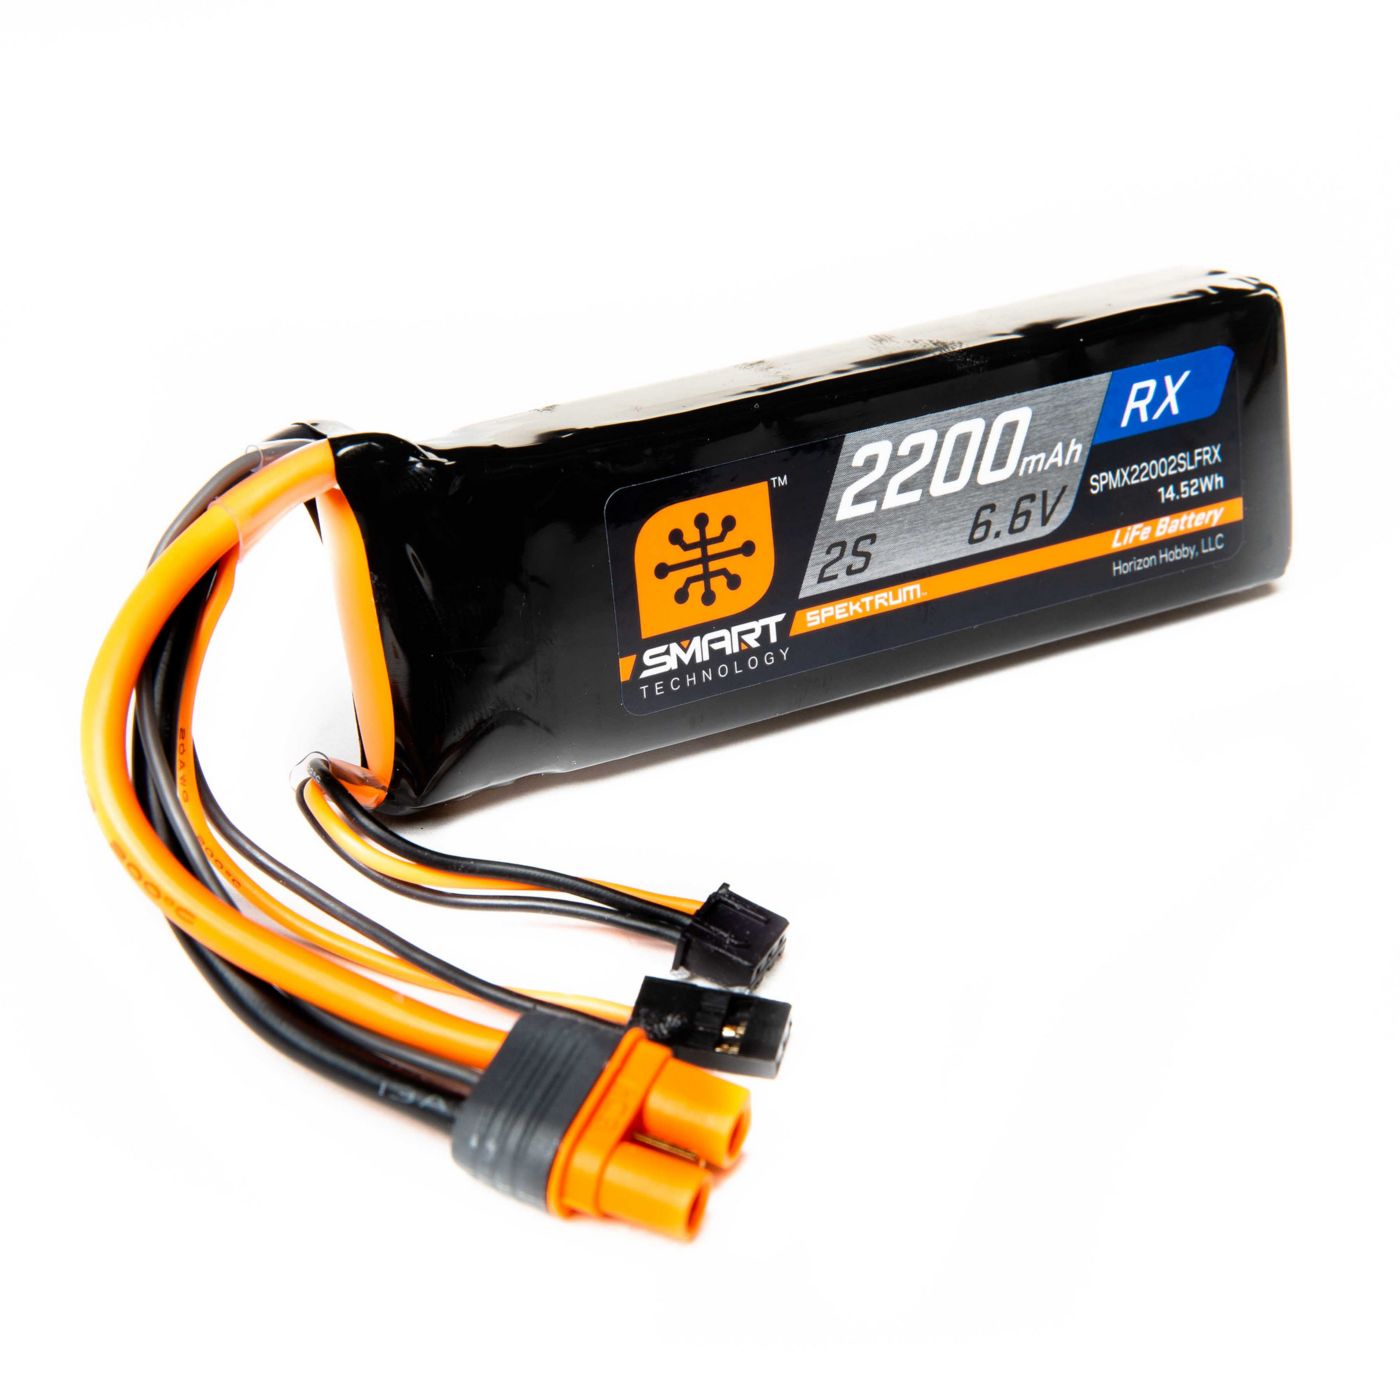 Spektrum 2200mAh 2S 6.6V Smart LiFe Receiver Battery IC3 SPMX22002SLFRX